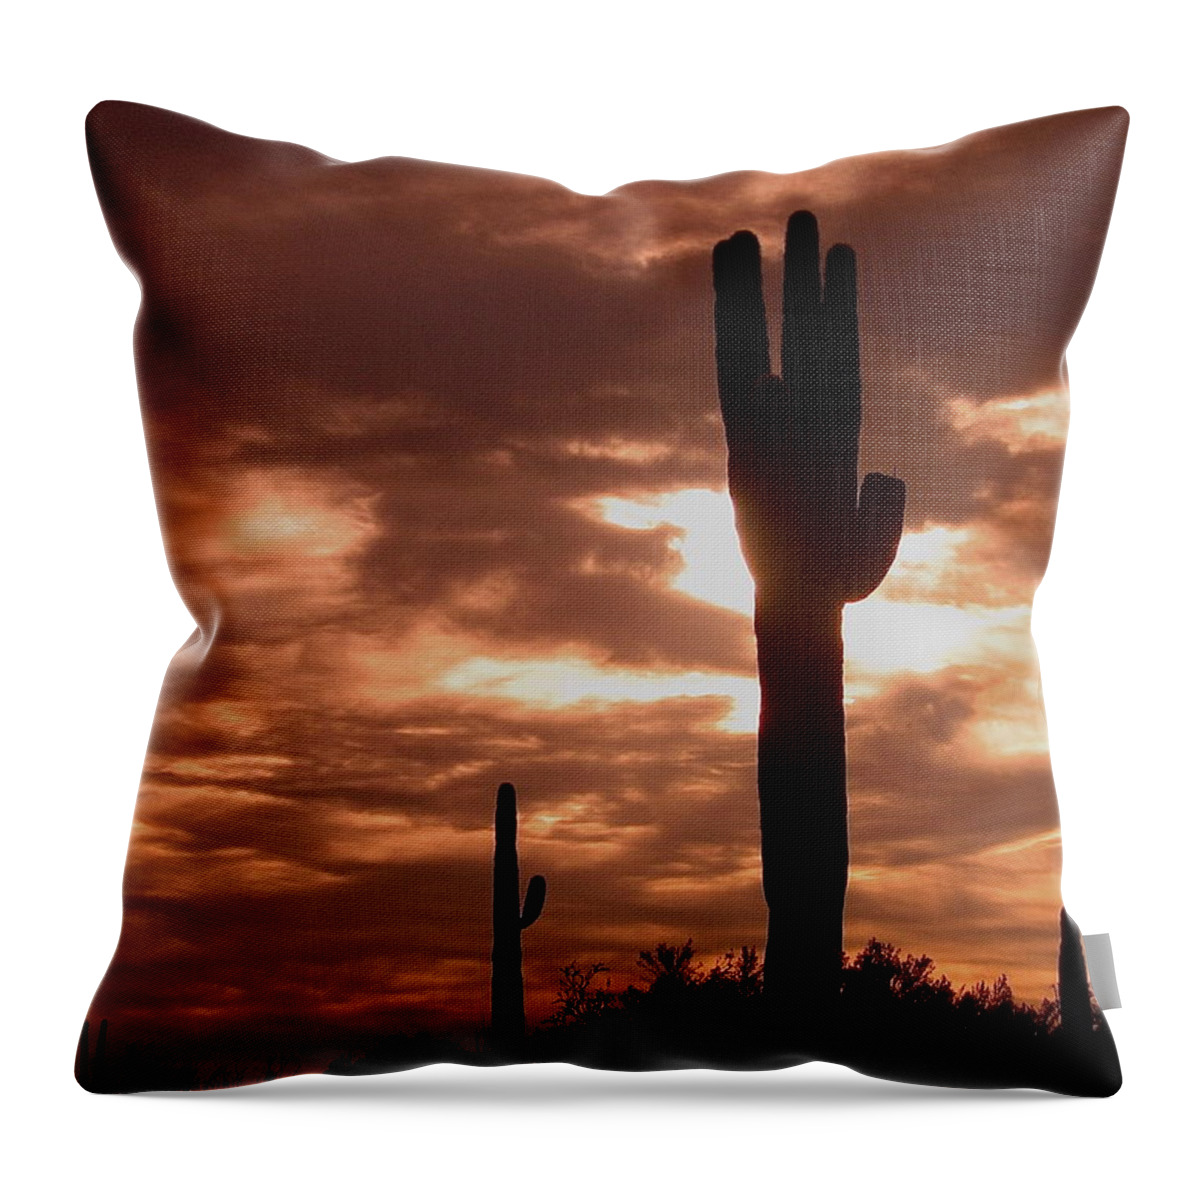 John Wayne Lawless Frontier Saguaro Forest Carefree Arizona Sunset Throw Pillow featuring the photograph Lawless Frontier homage 1935 saguaro forest by David Lee Guss